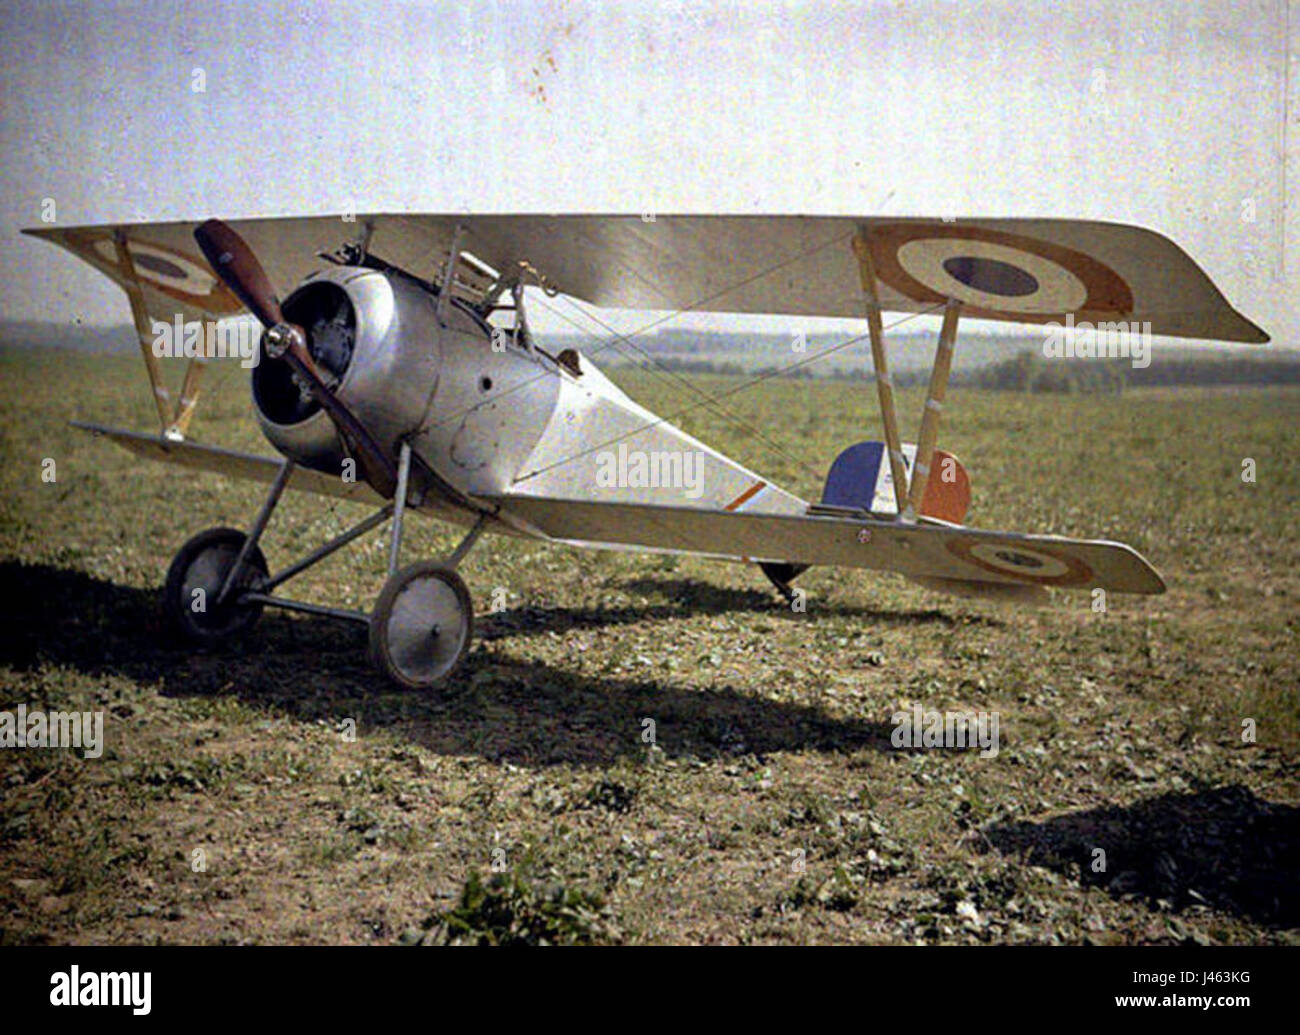 Nieuport 23 colour photo Stock Photo